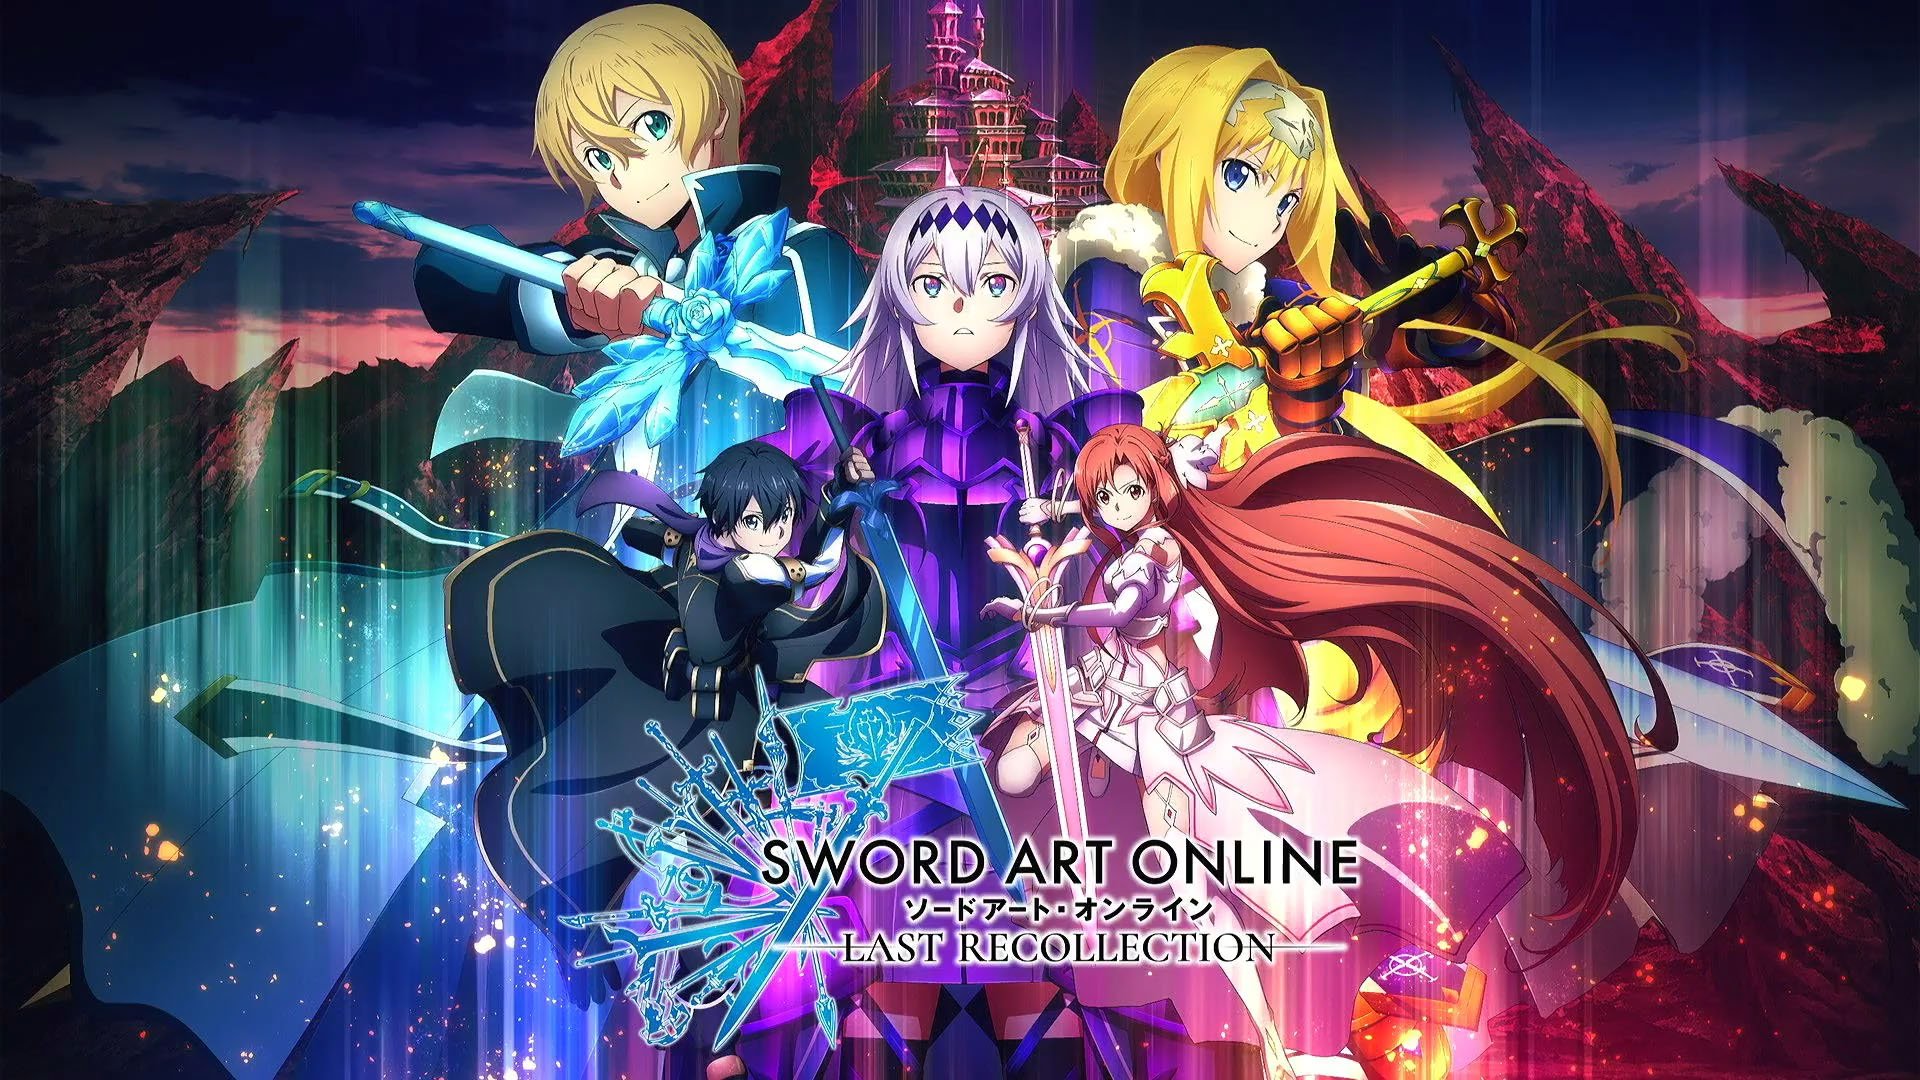 Sword Art Online Alternative: Gun Gale Online Season 2 Announced